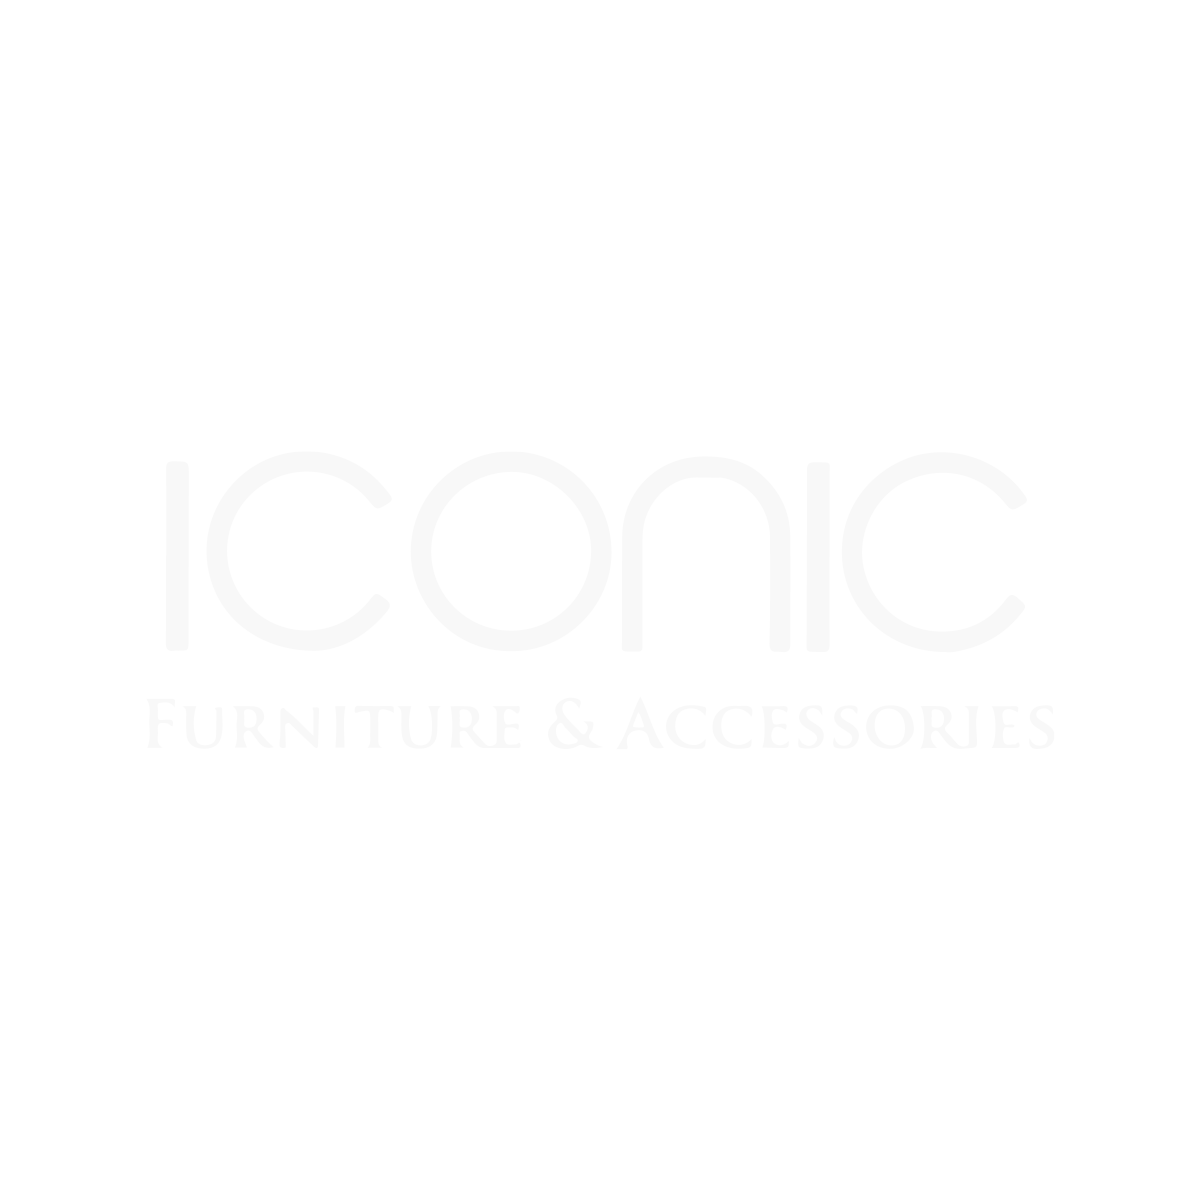 lconic furniture store logo